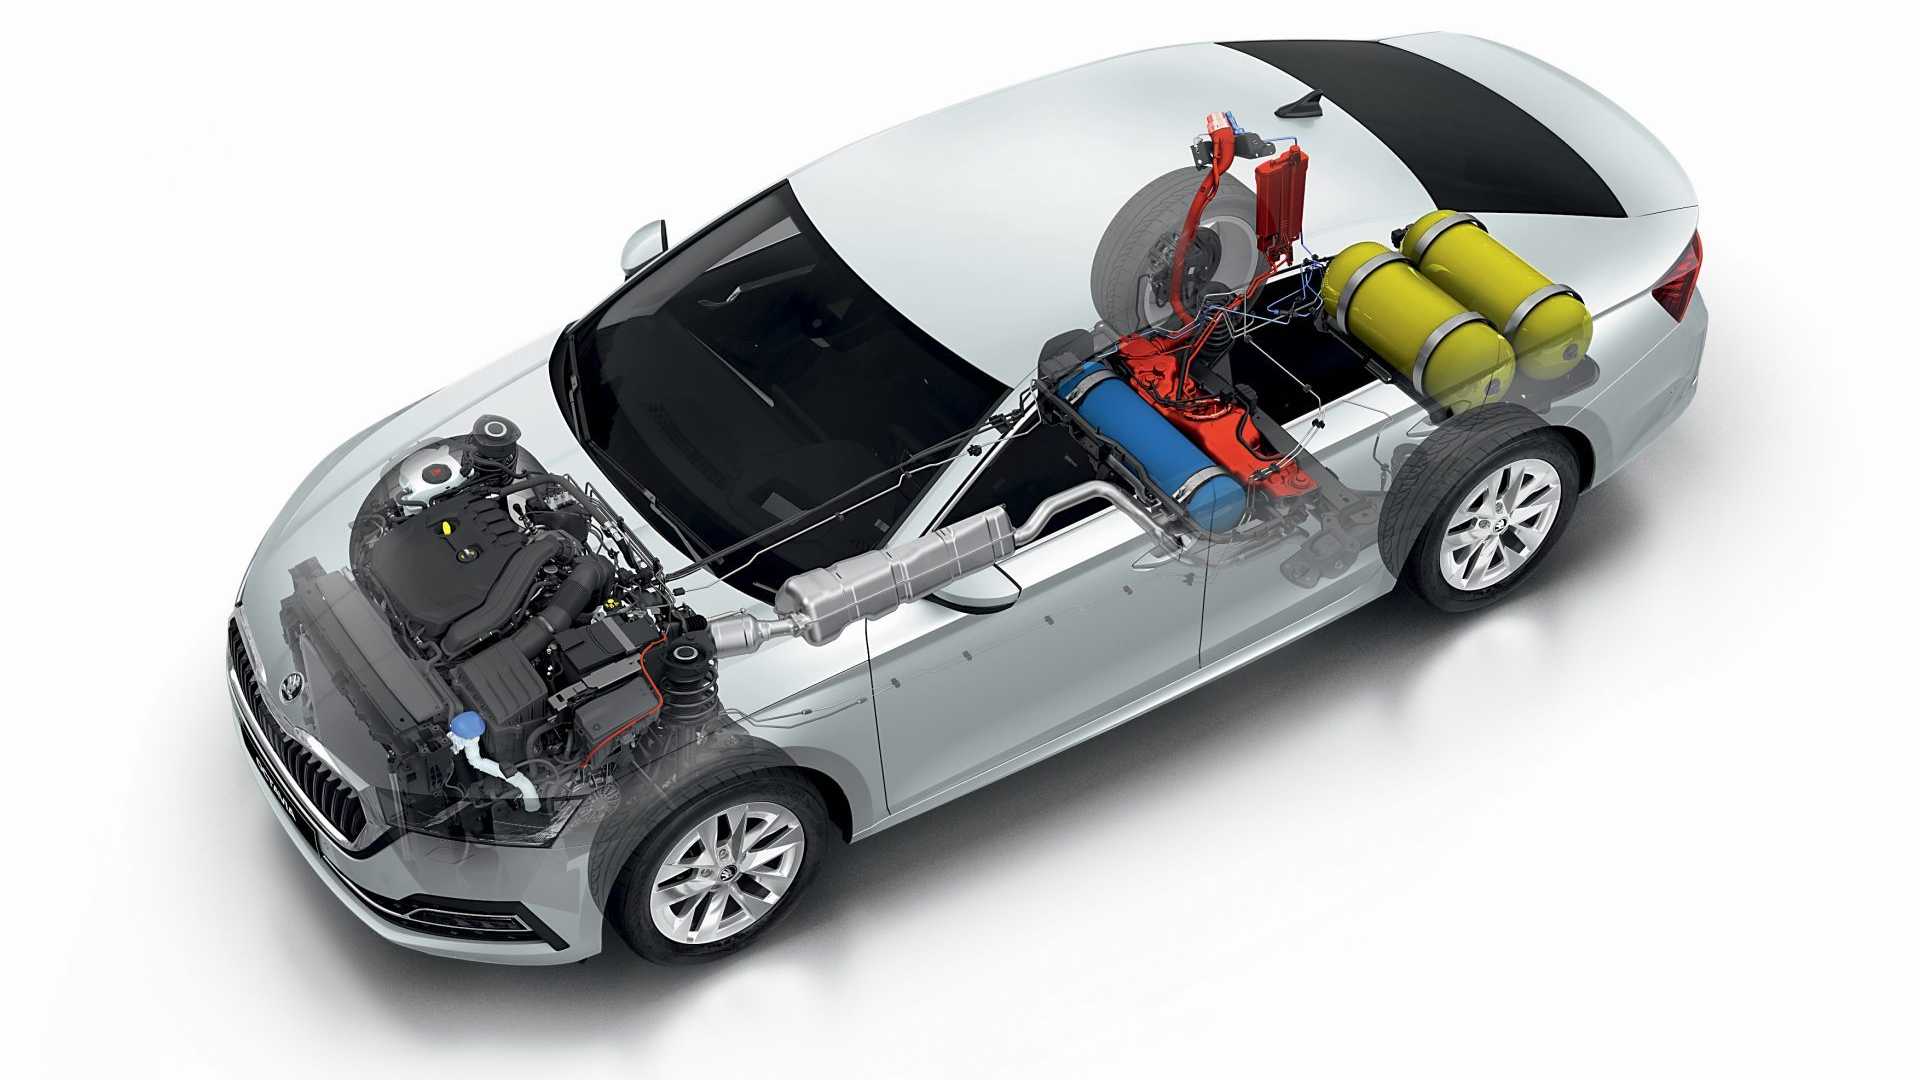 Nova Škoda Octavia G-TEC prelazi 500 km na metan